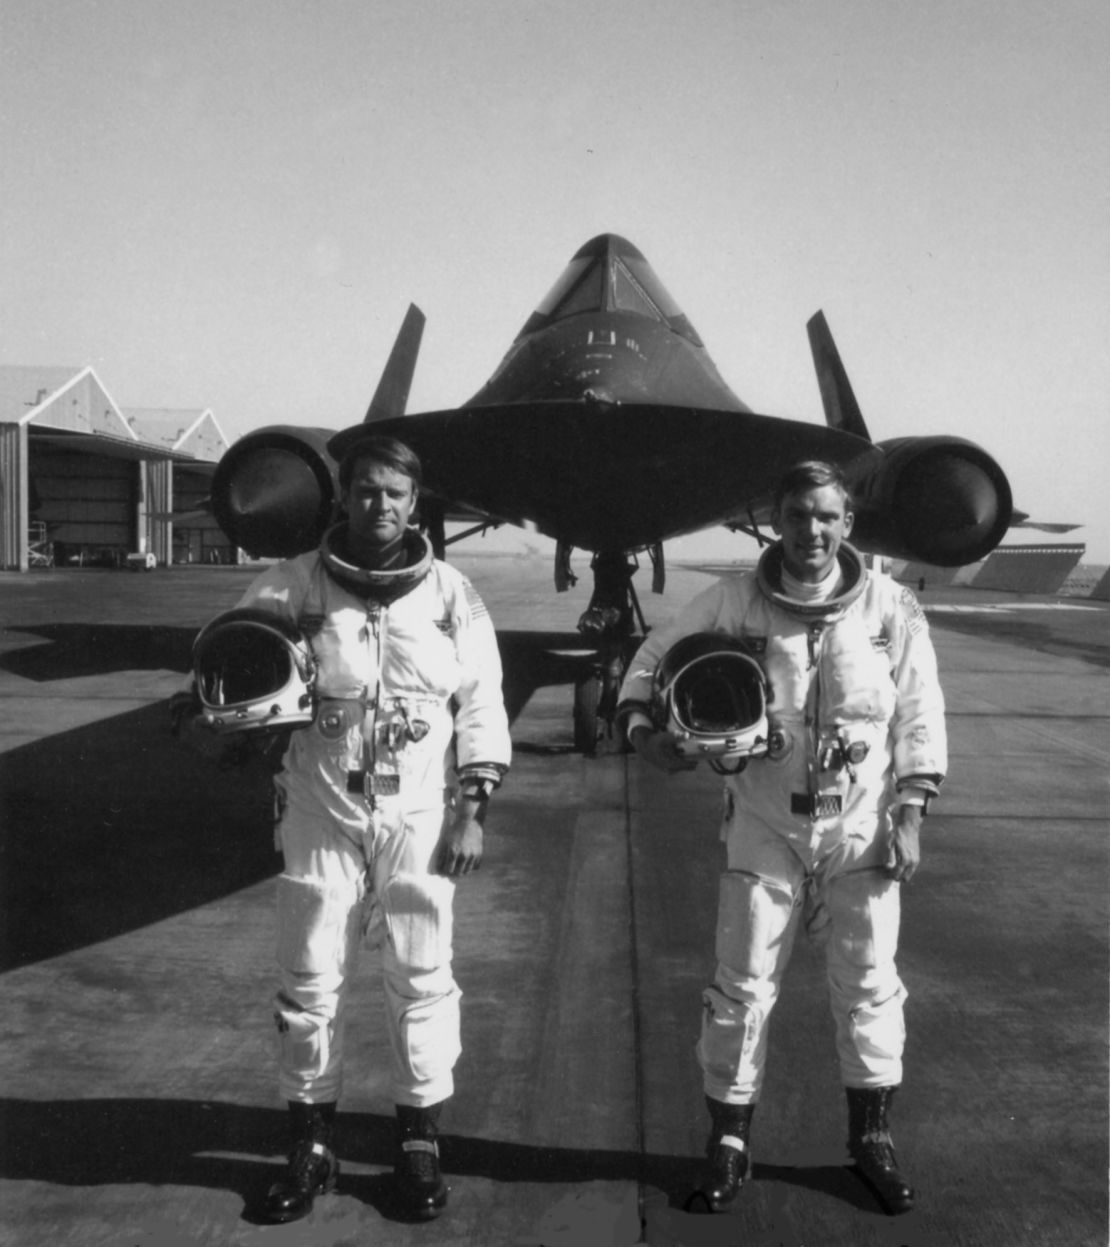 In 1976, reconnaissance officer George Morgan, left, and pilot Eldon "Al" Joersz set the world aviation speed record in an Air Force SR-71 Blackbird spy jet. Their record -- 2,193 mph -- still stands. 